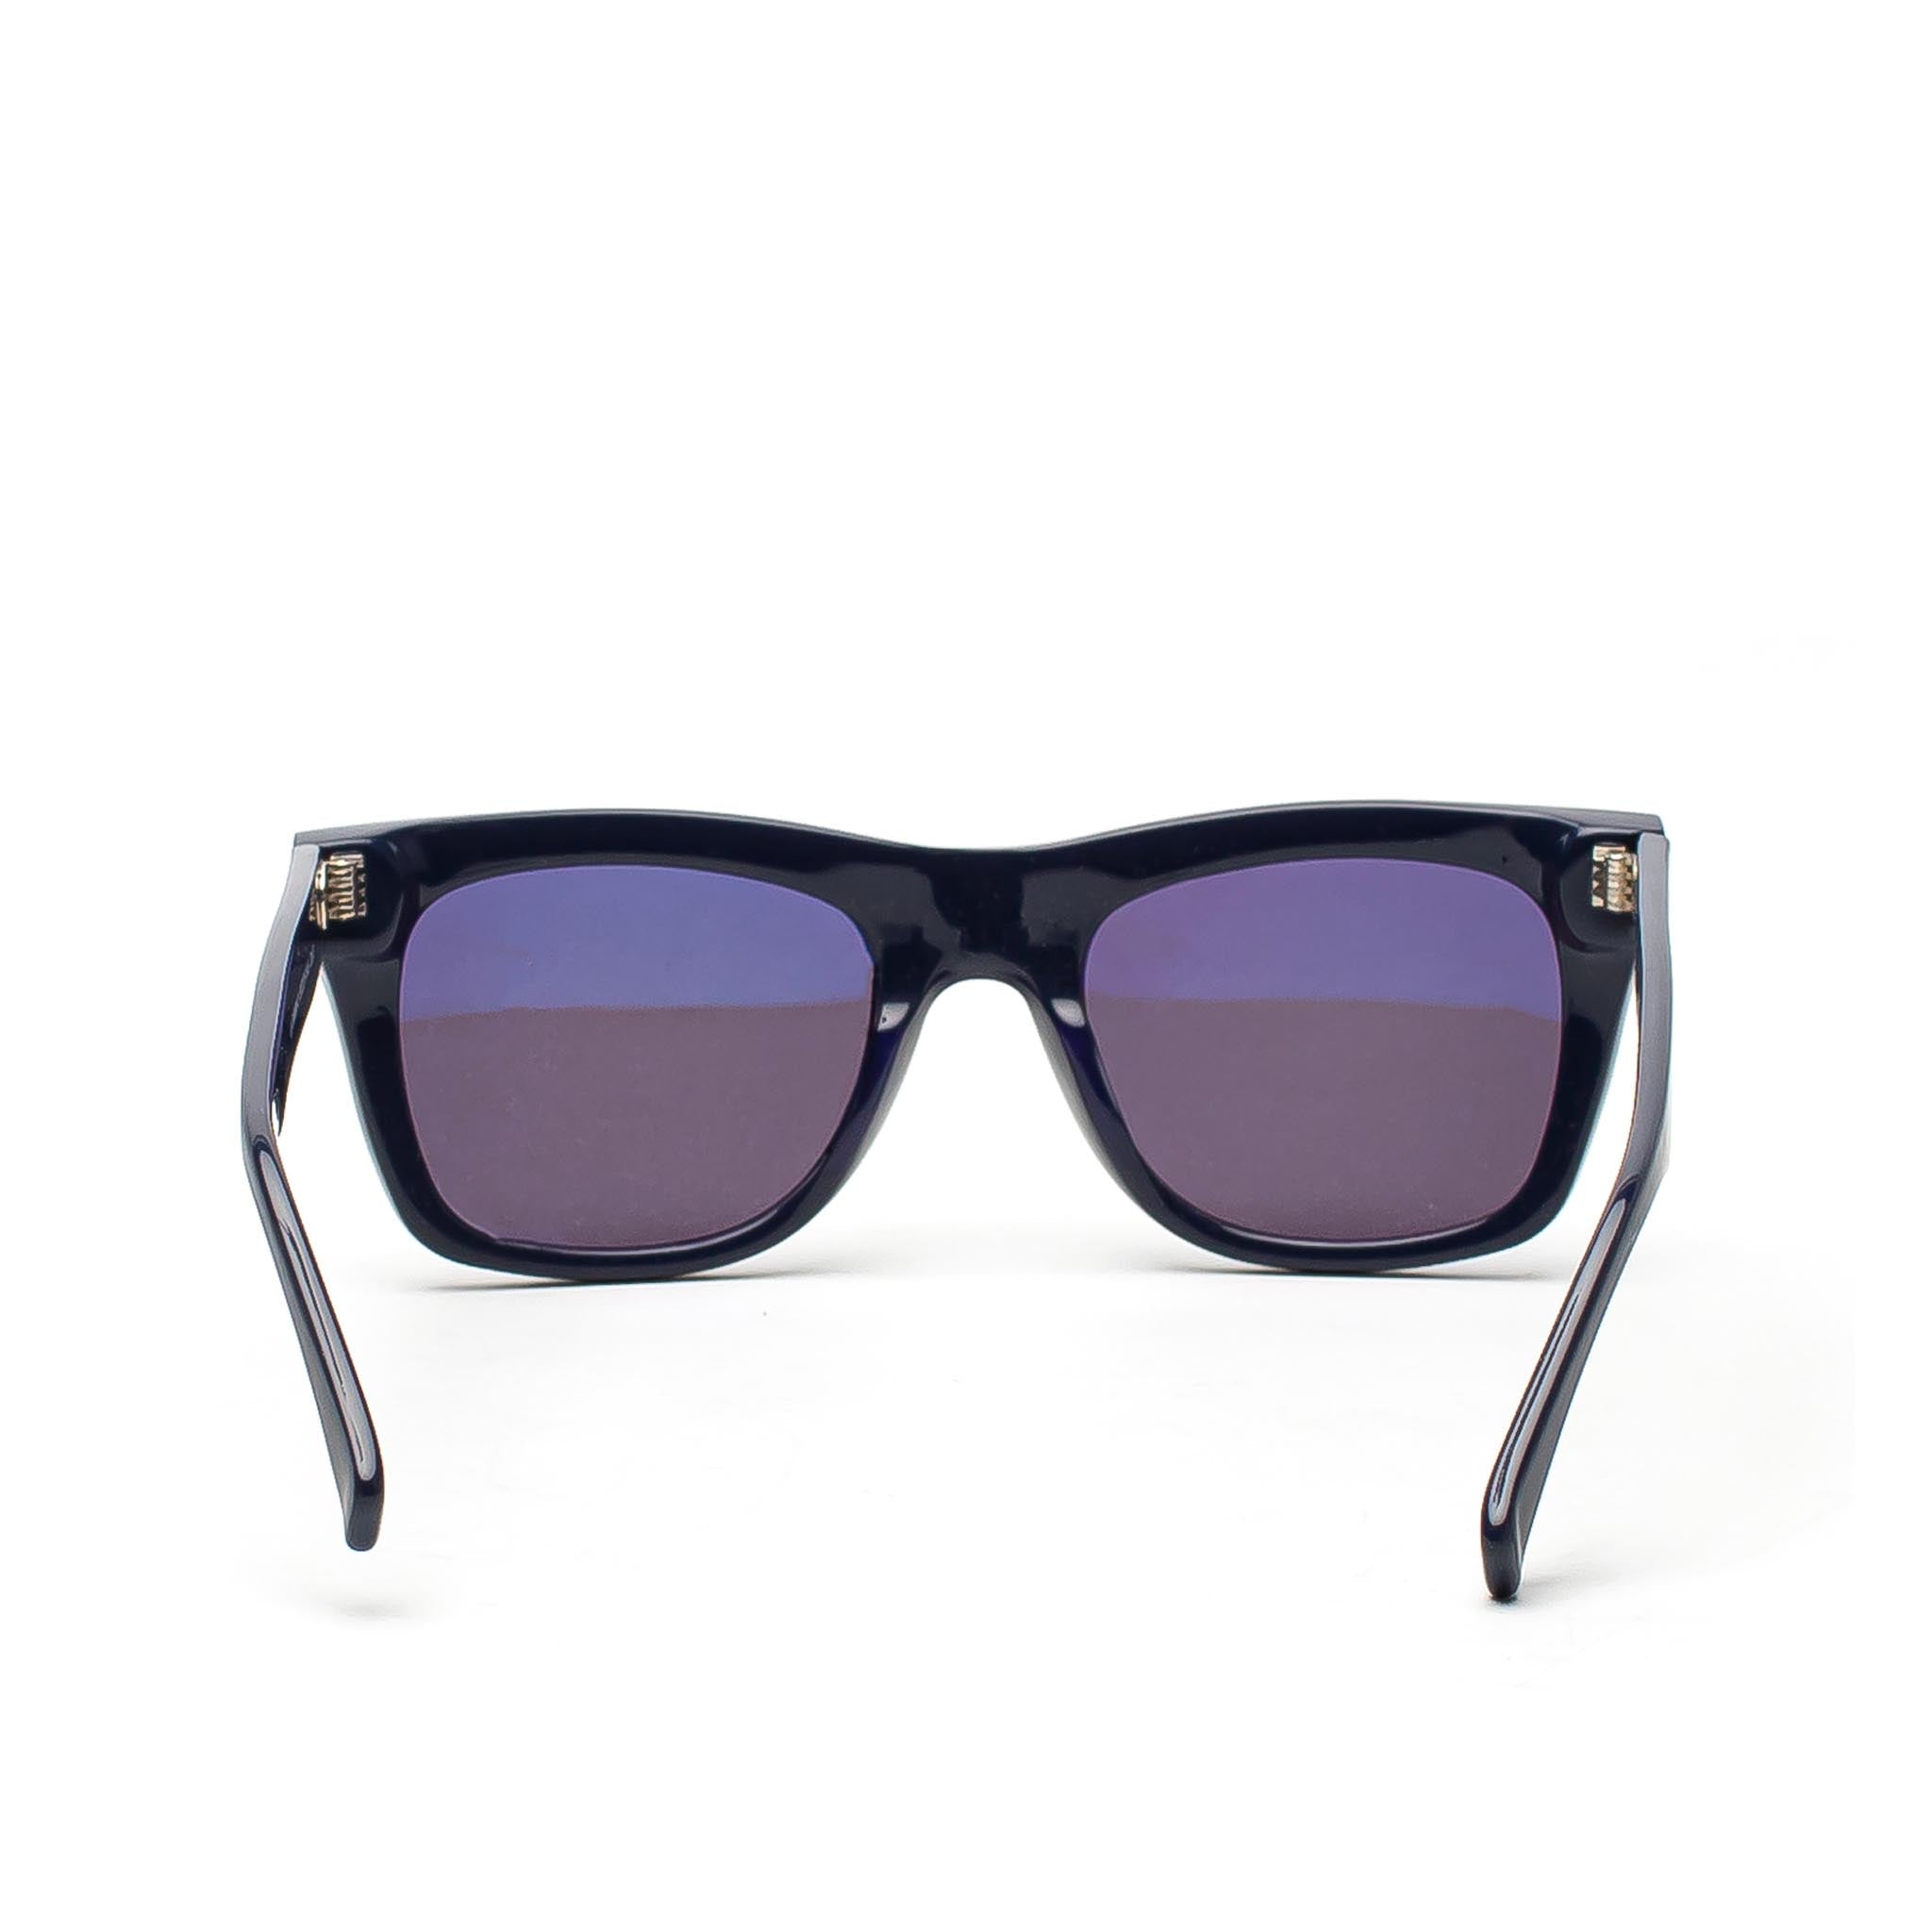 HOMME+ HP001 Sunglasses Navy